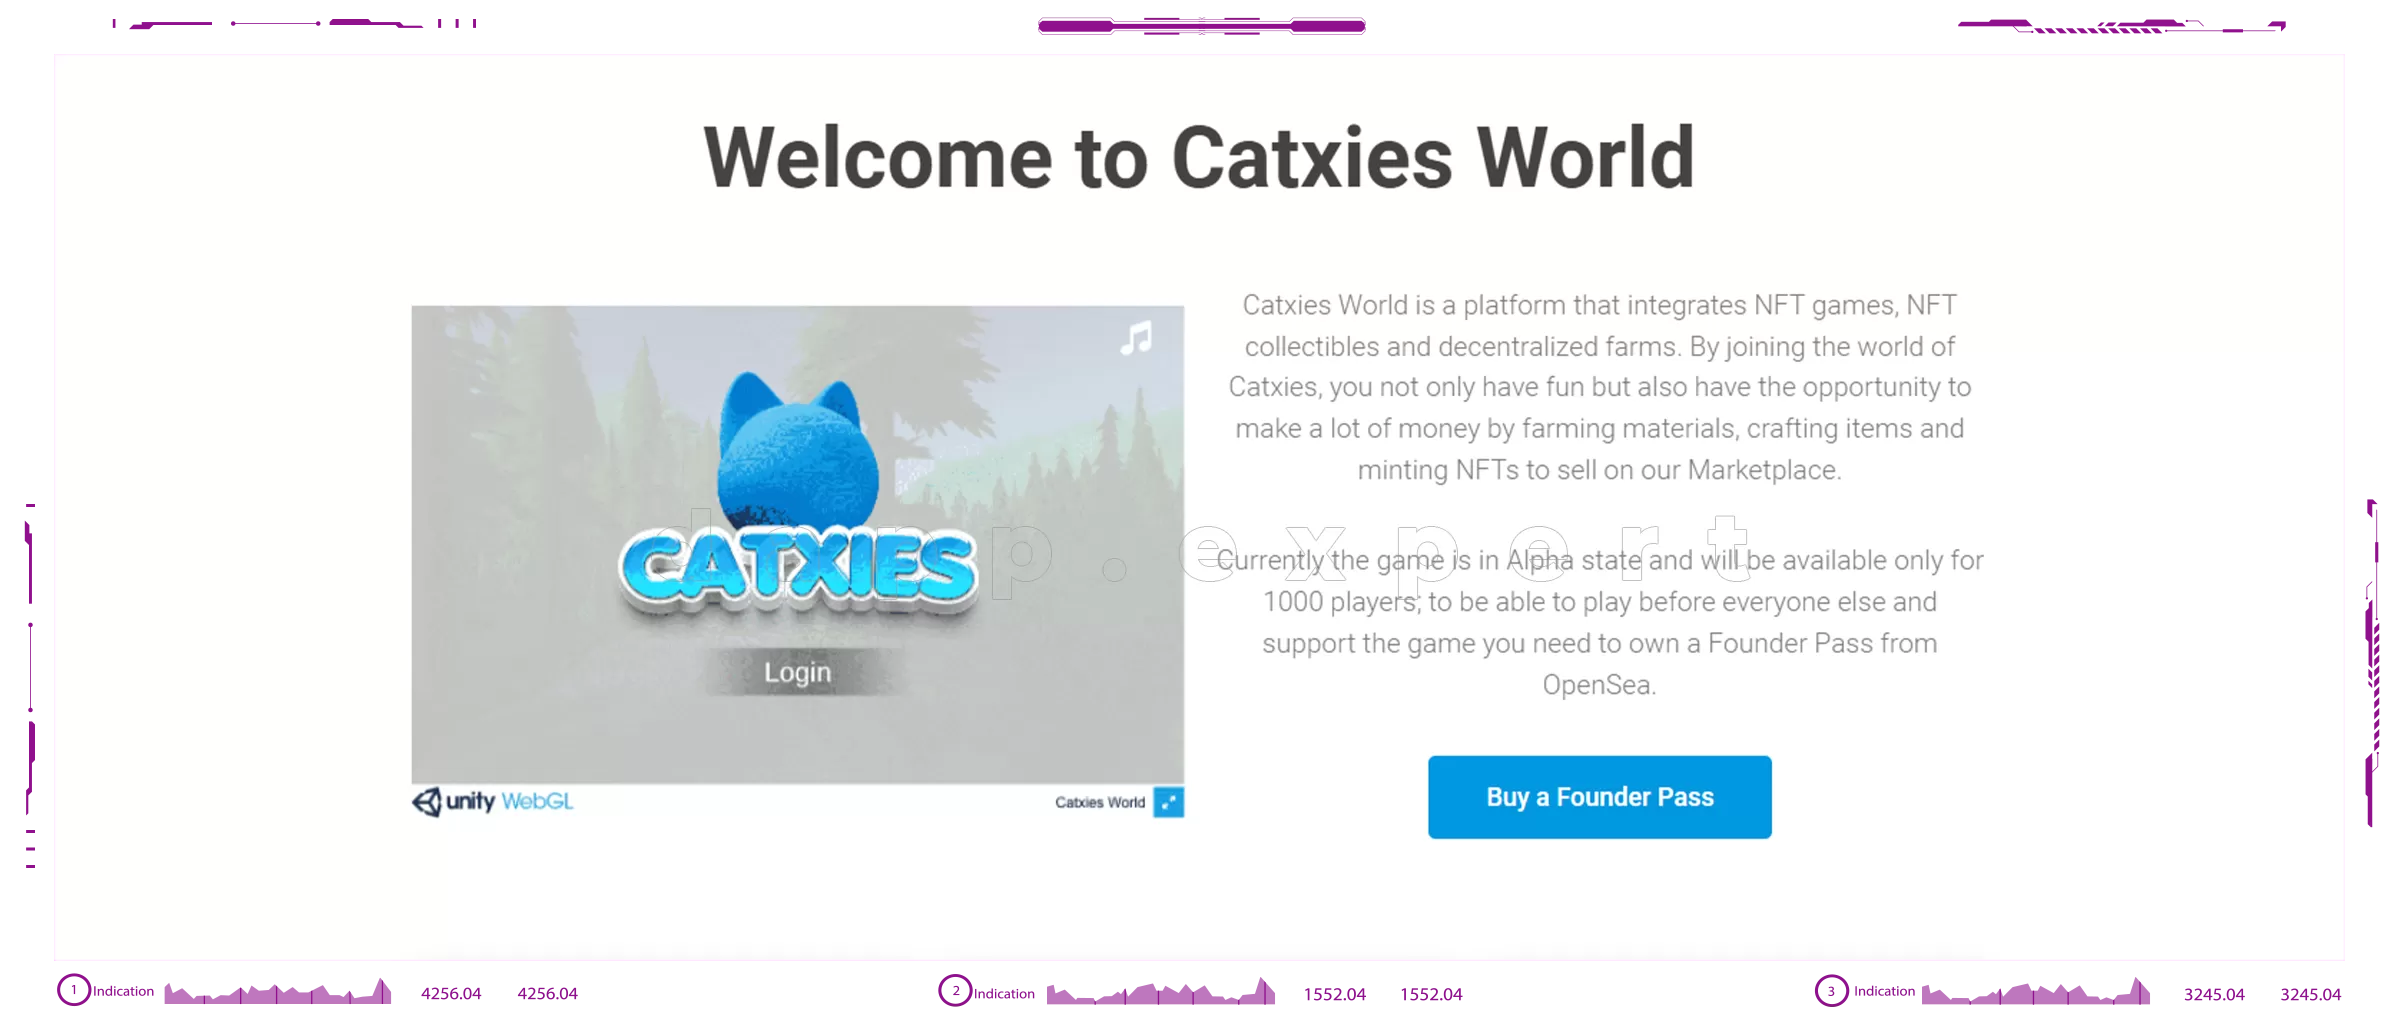 Catxies World dapps